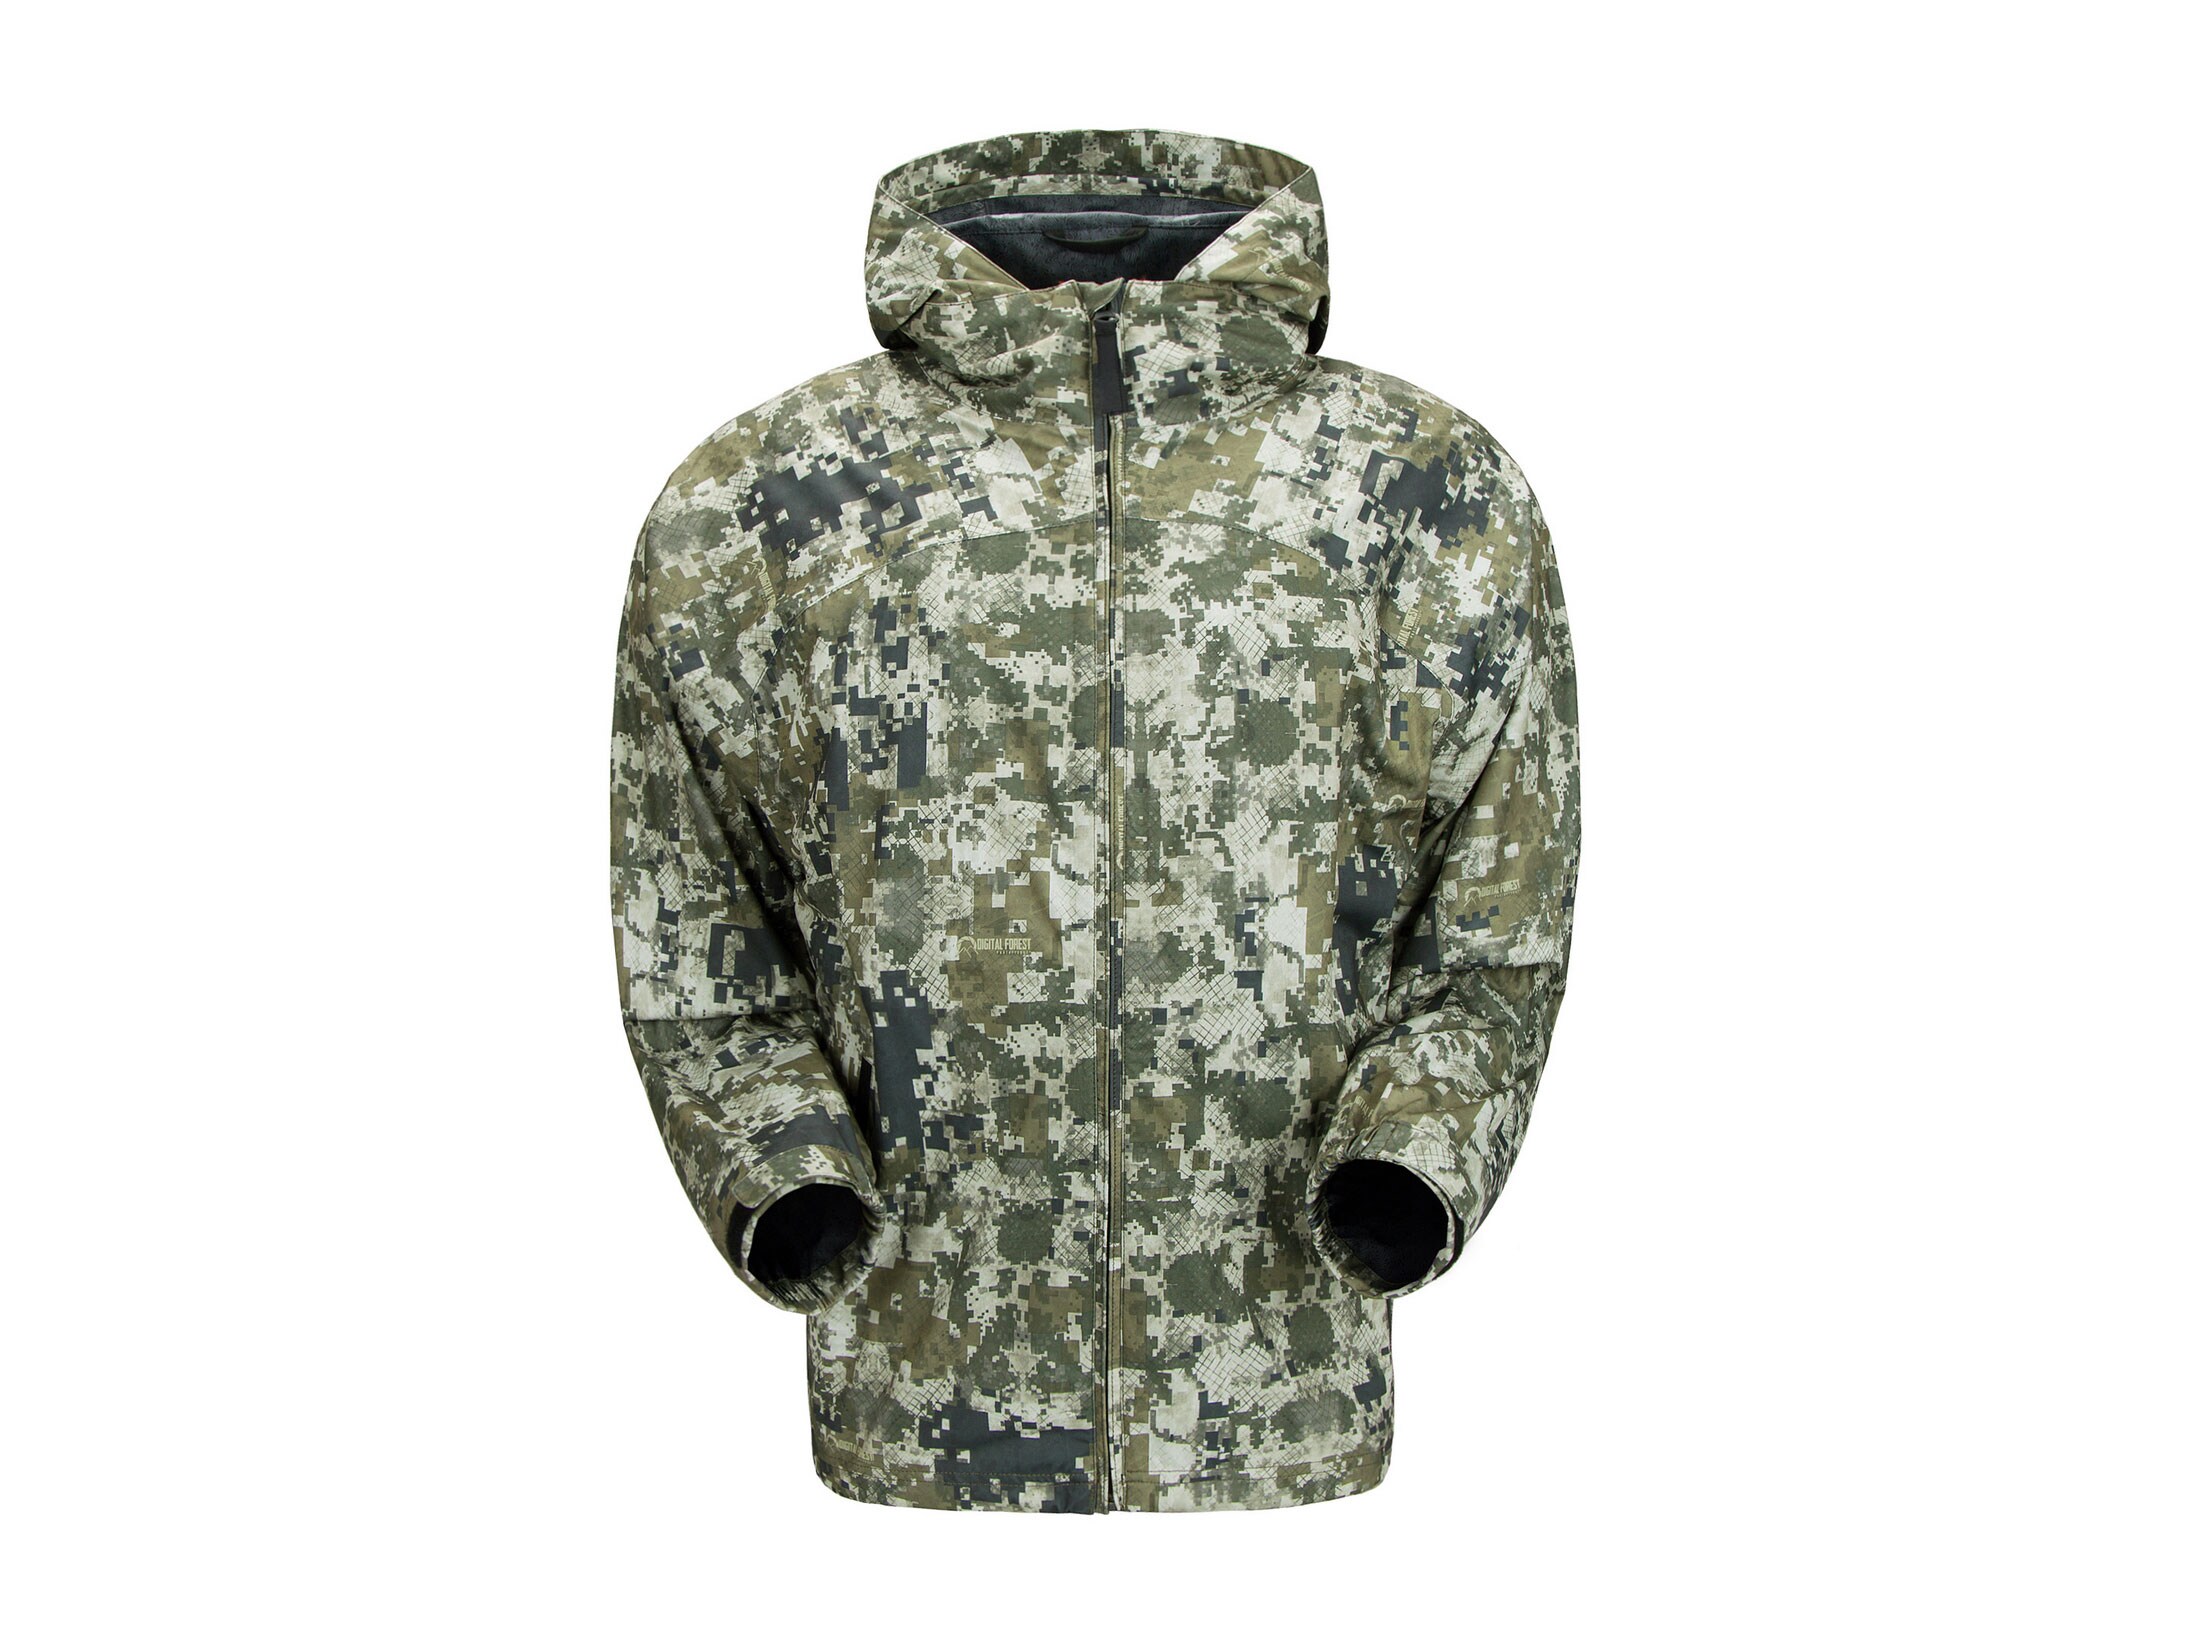 Plythal Men's Ultralight Packable Waterproof Rain Jacket Polyester